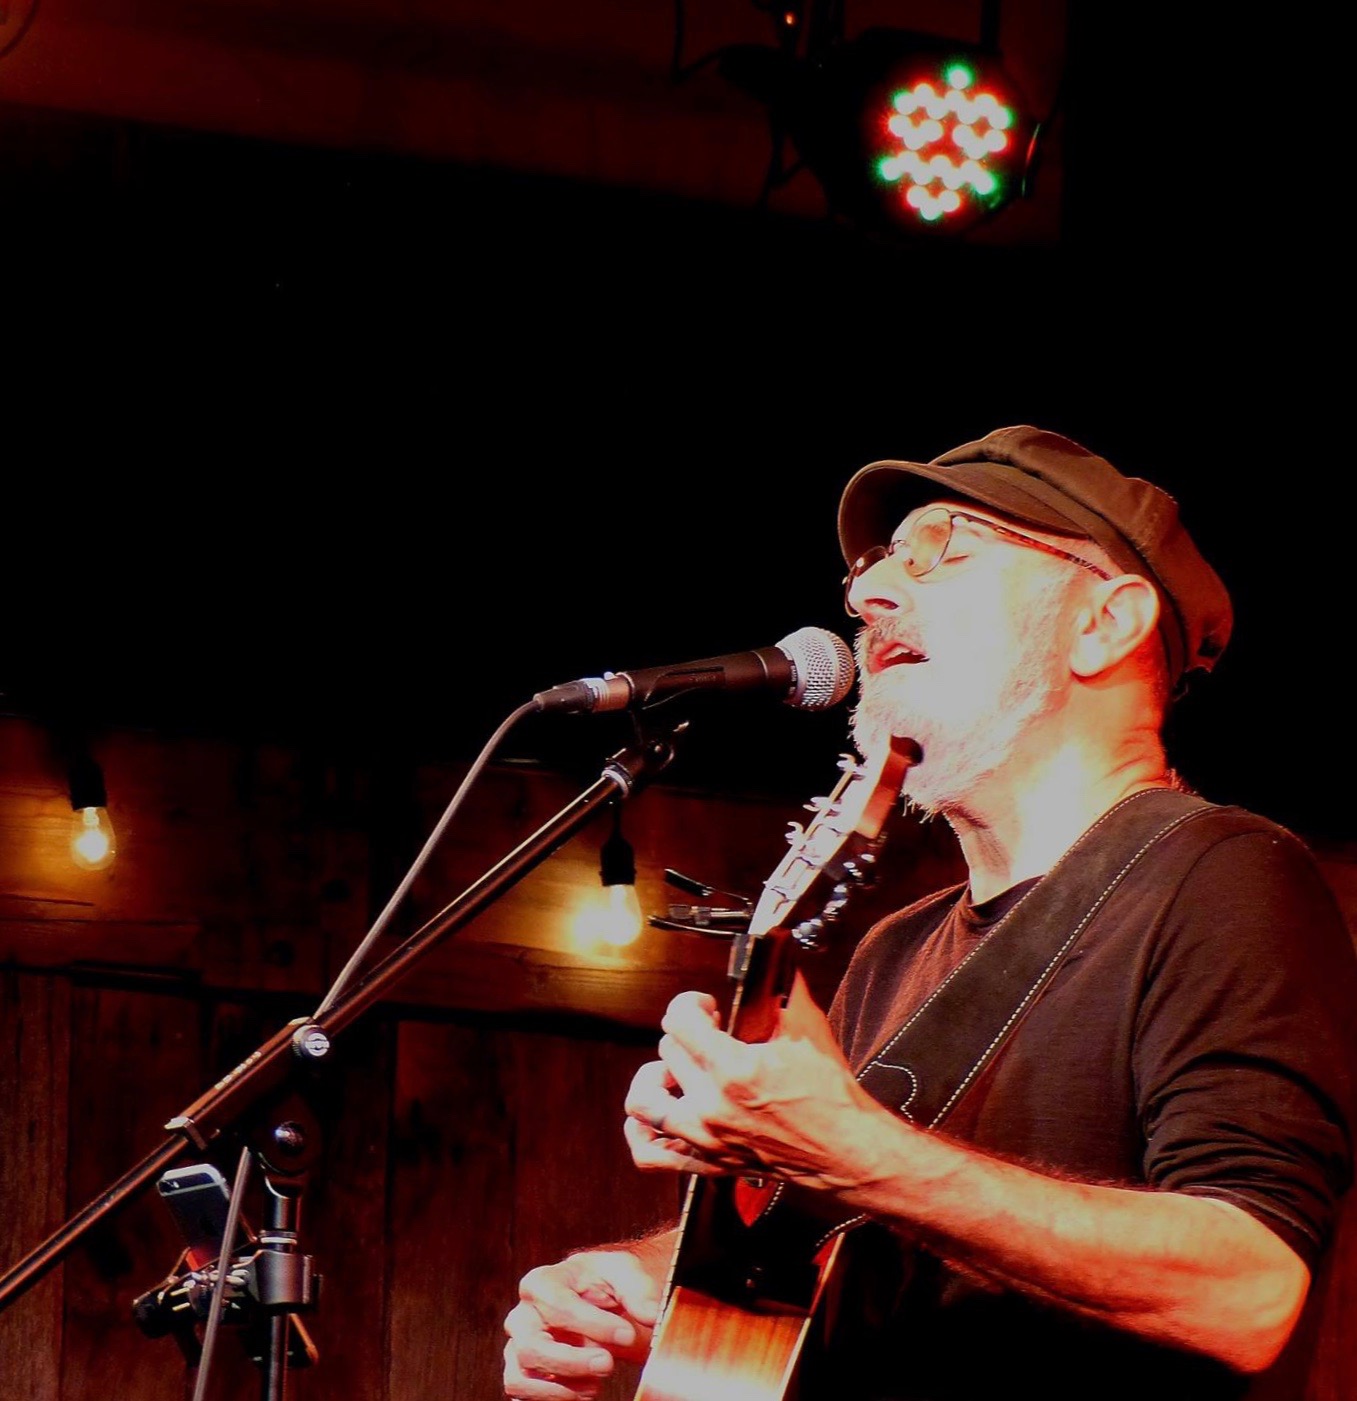 Ken performing at Heartwood Concert Hall, Owen Sound, Ontario, 2017